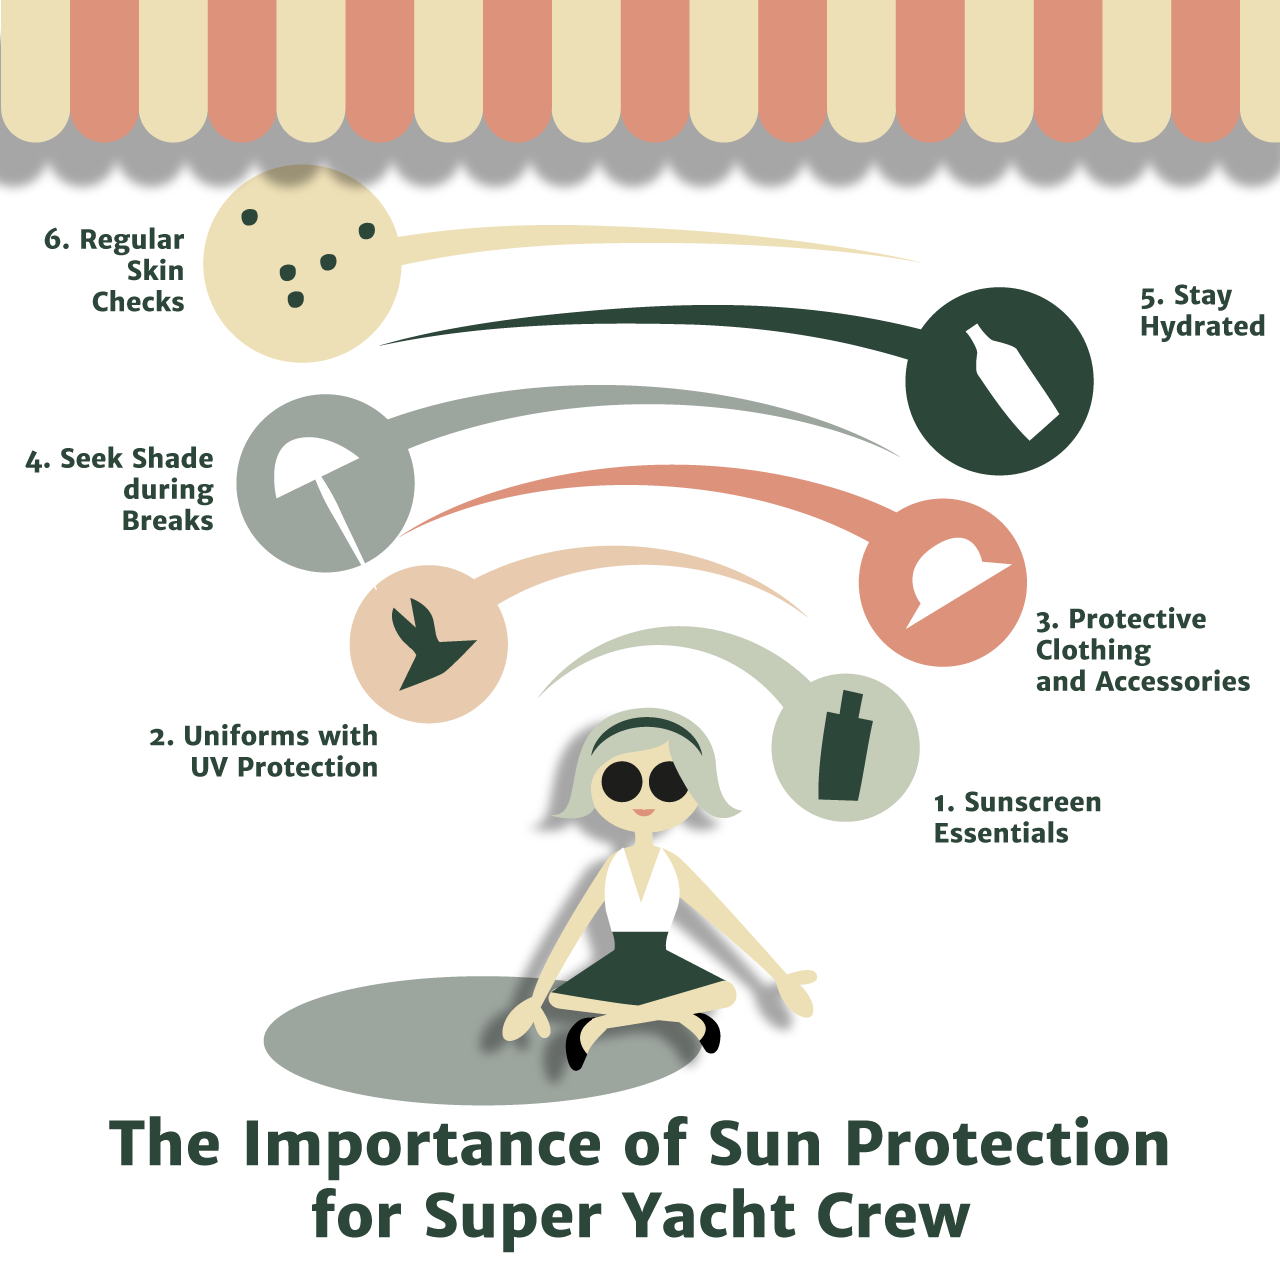 Skincare tips - Skin Protection blog post illustration - MH Boutique